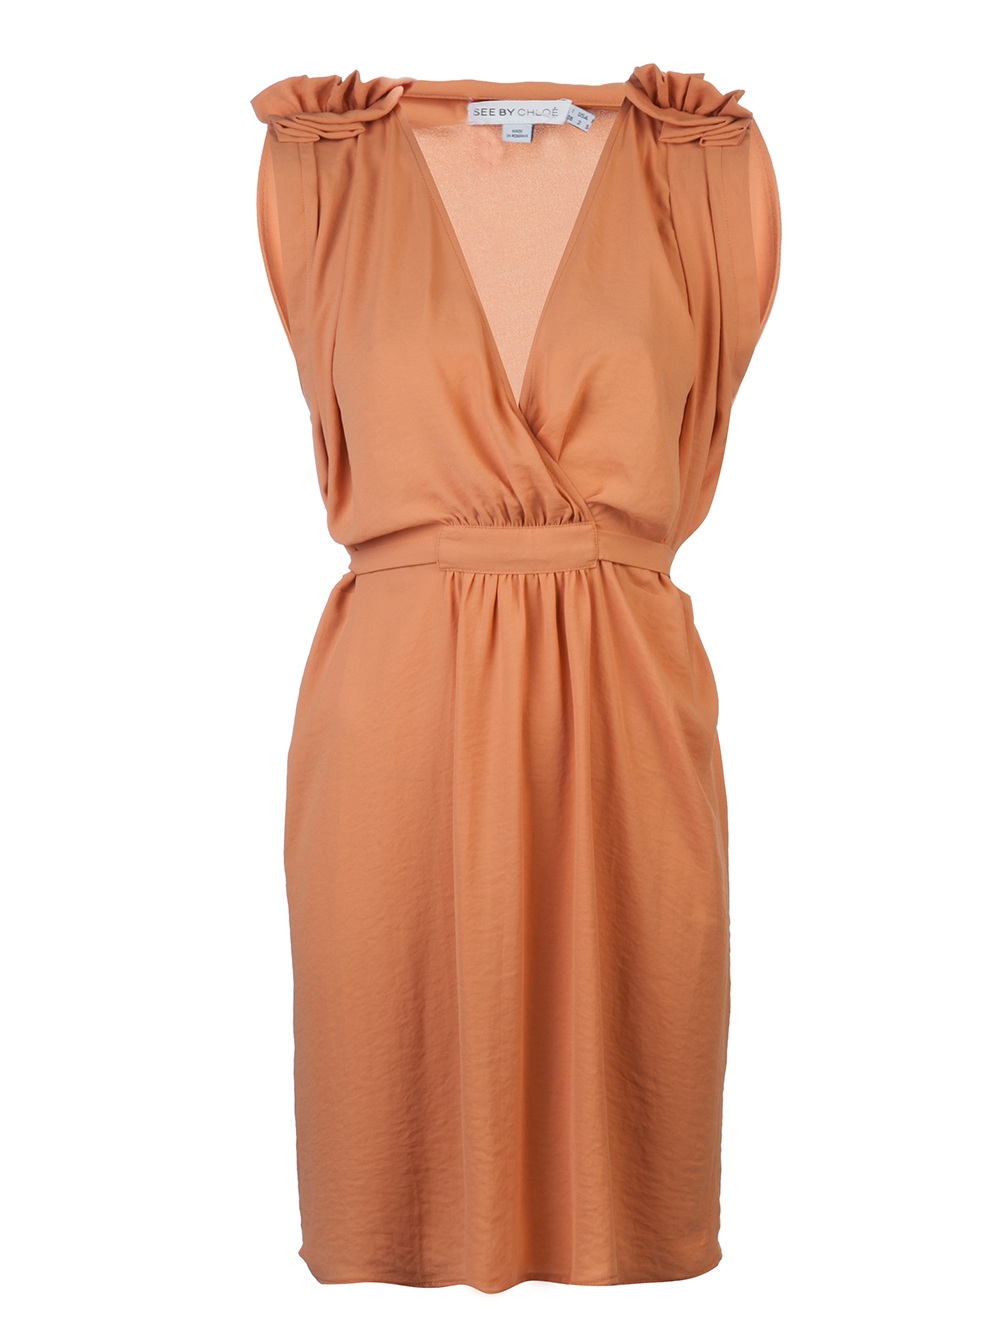 See By Chloé Ruffled Dress in Orange | Lyst